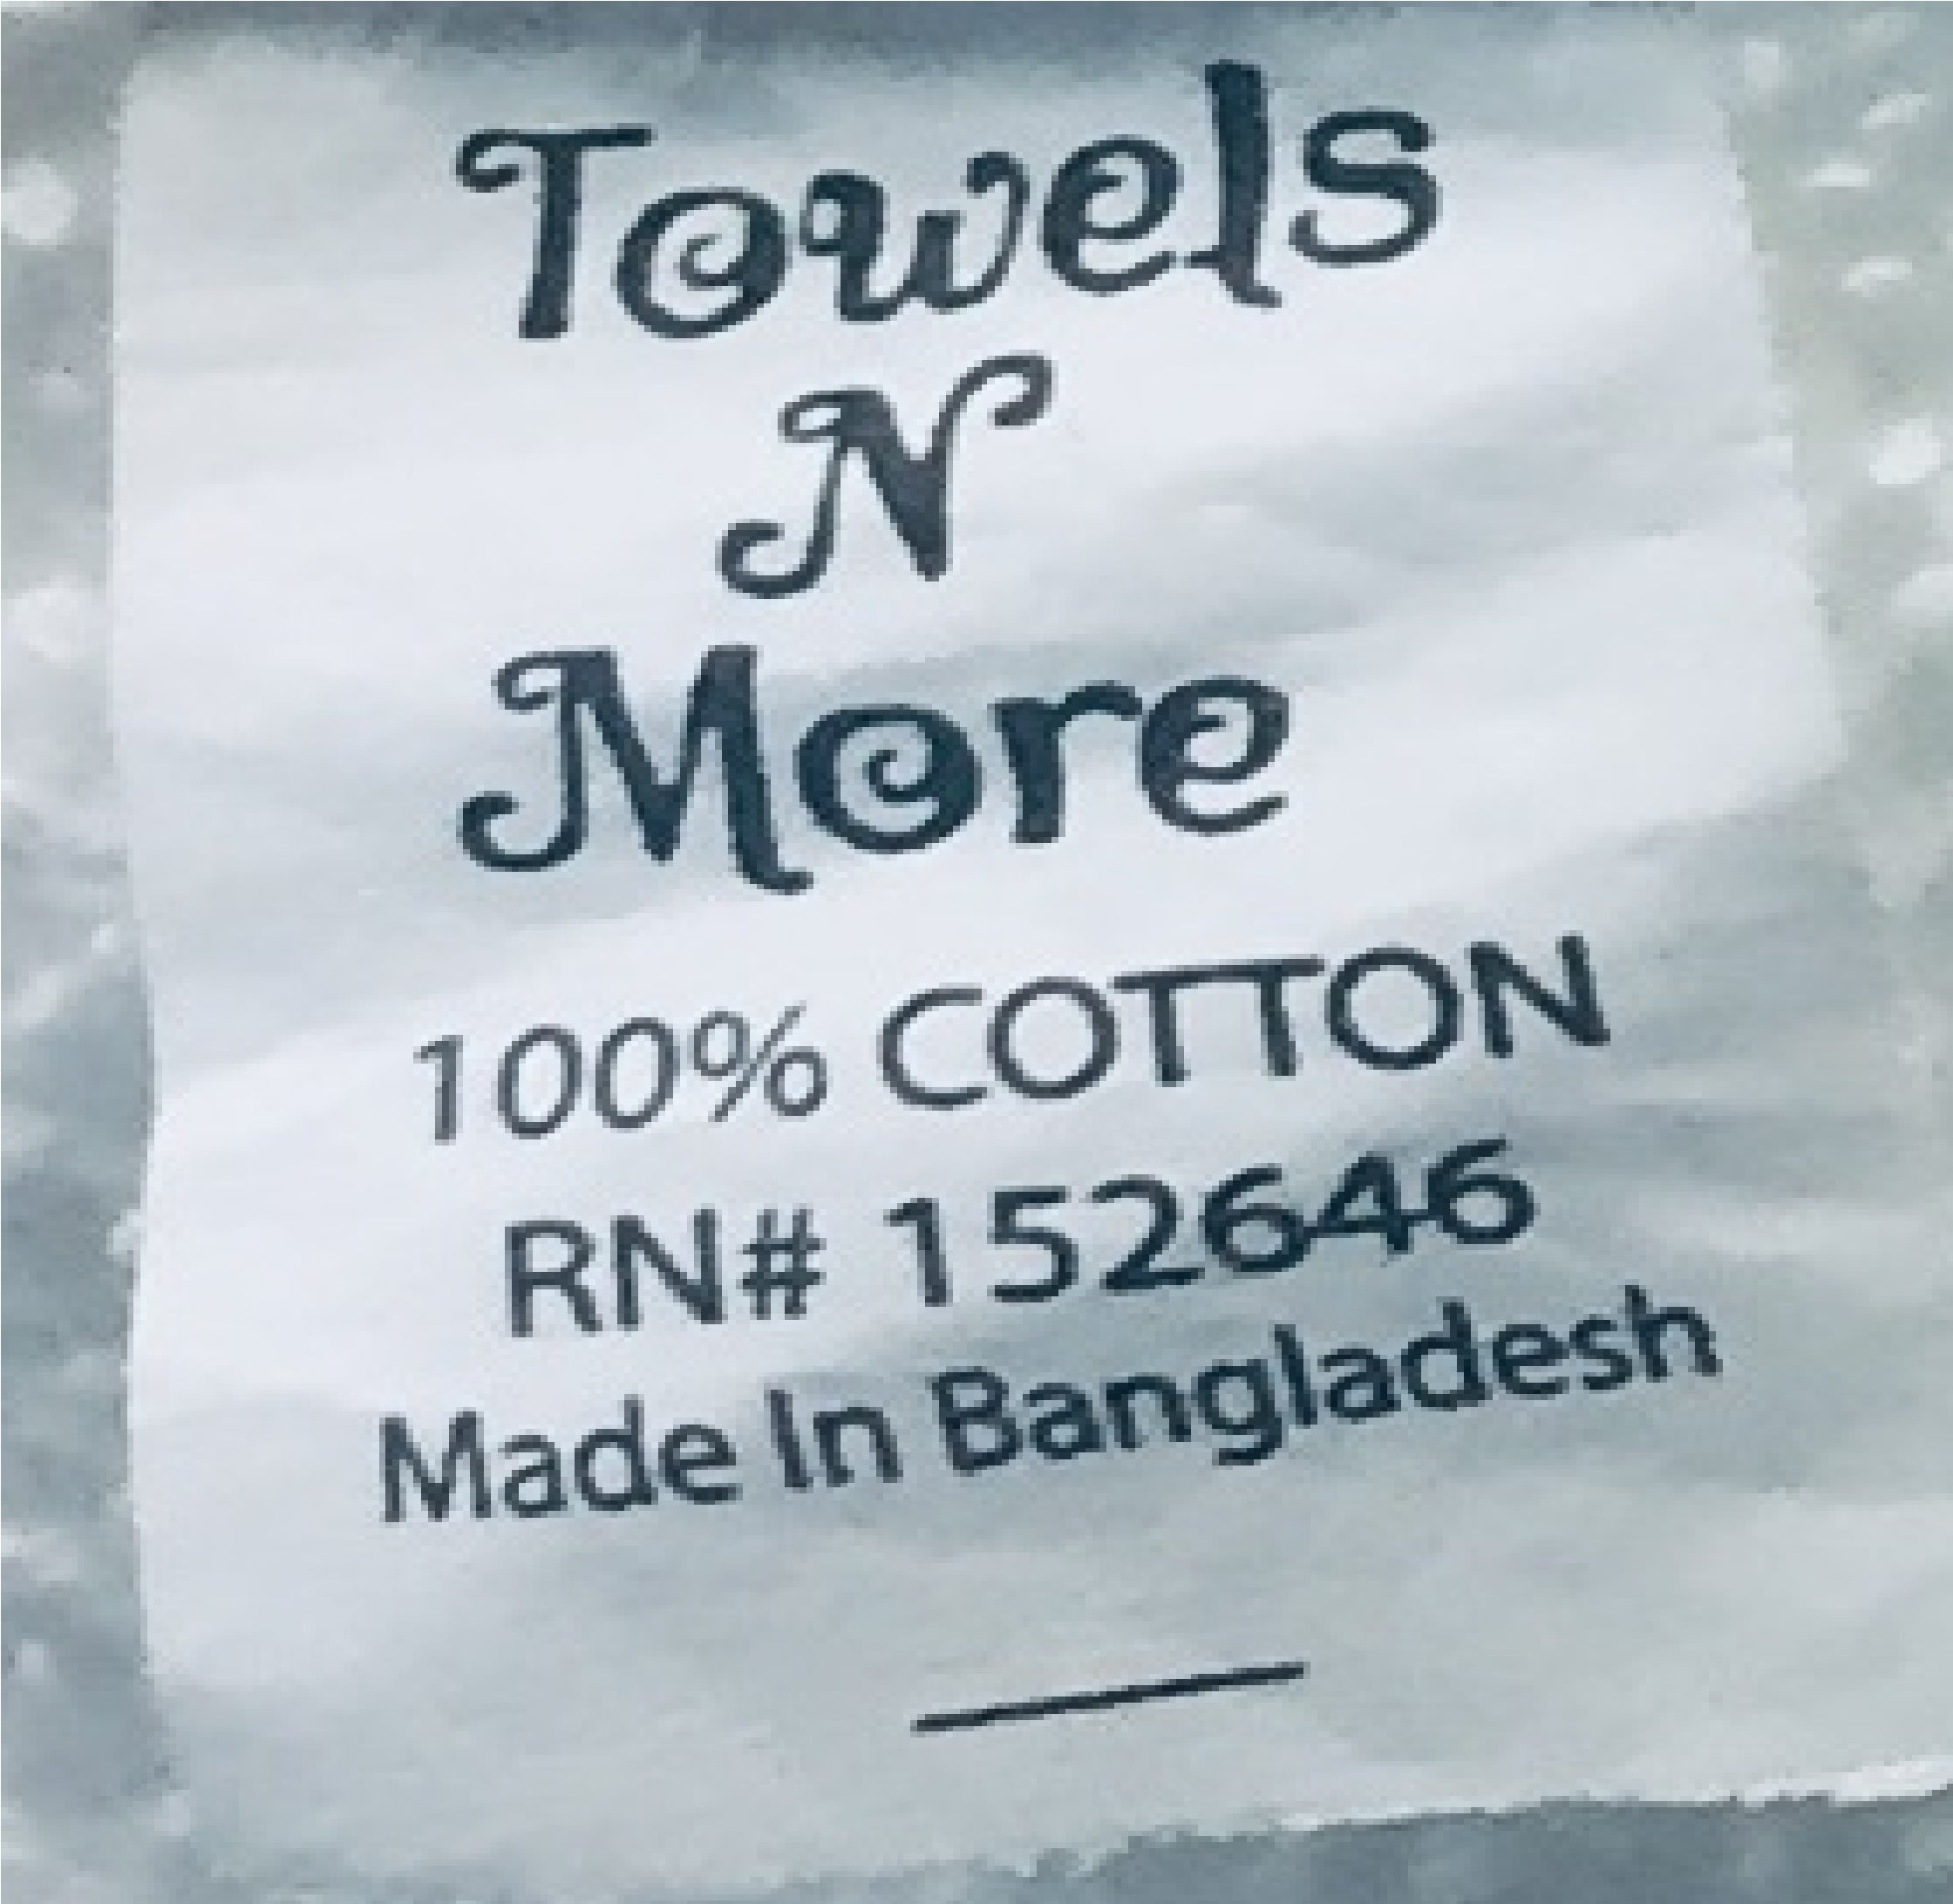 Lavex Economy 16 x 27 Cotton Hand Towel 3.5 lb. - 12/Pack